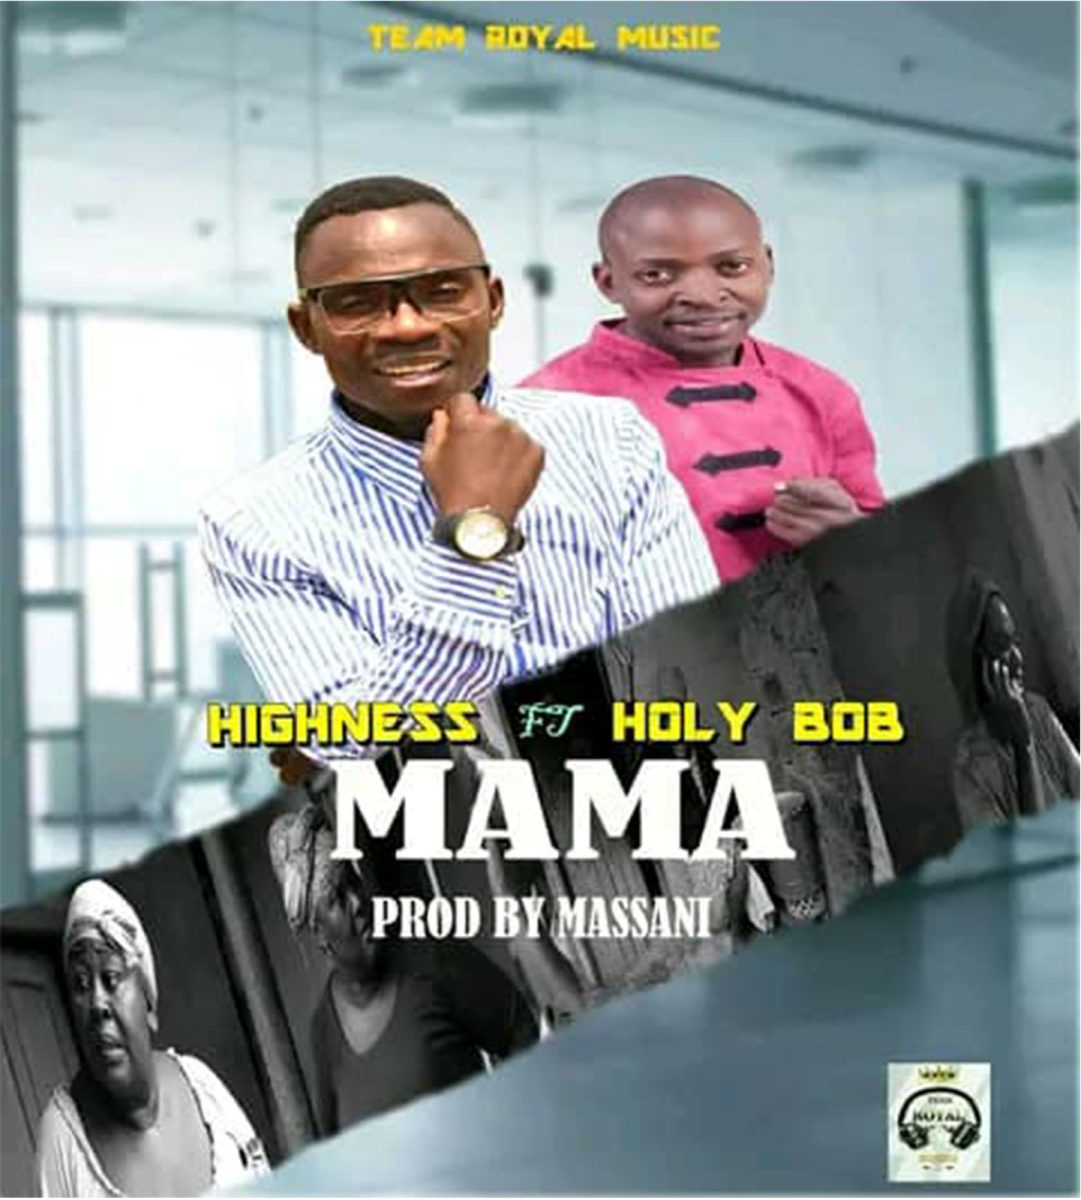 Highness ft. Holy Bob - Mama